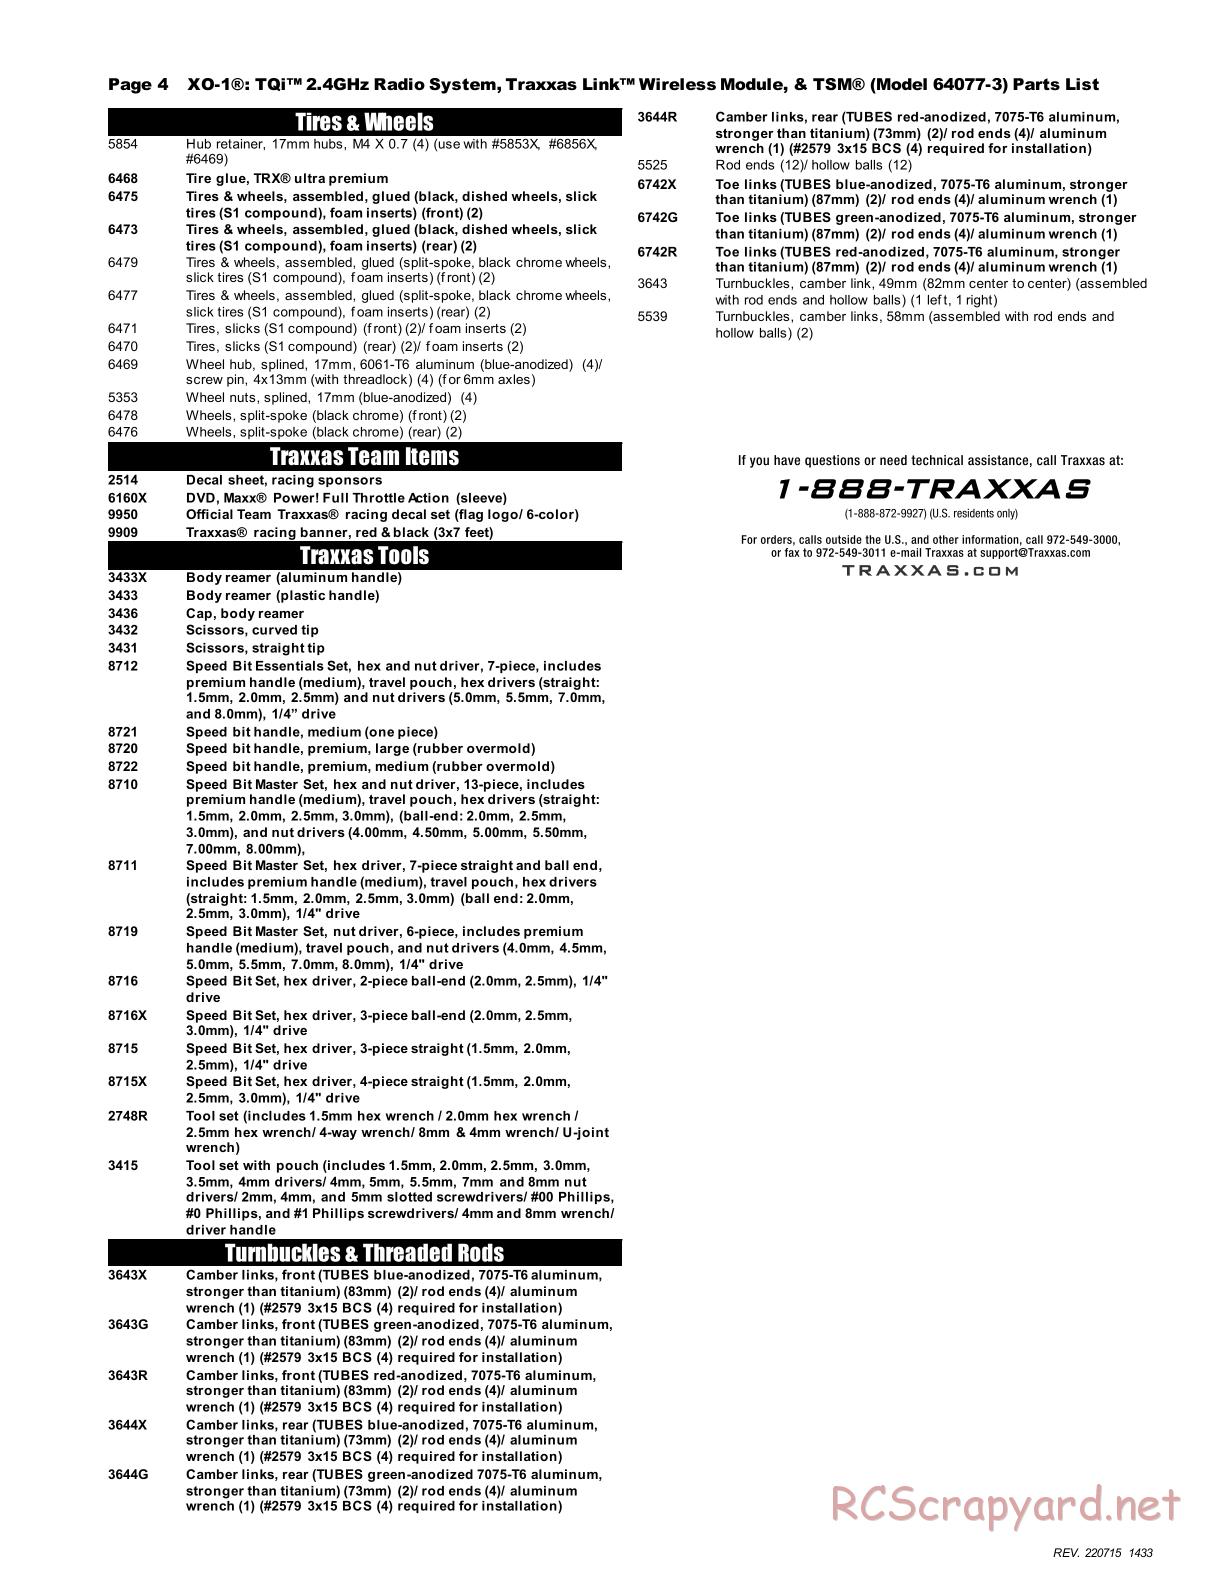 Traxxas - XO-1 TSM - Parts List - Page 4